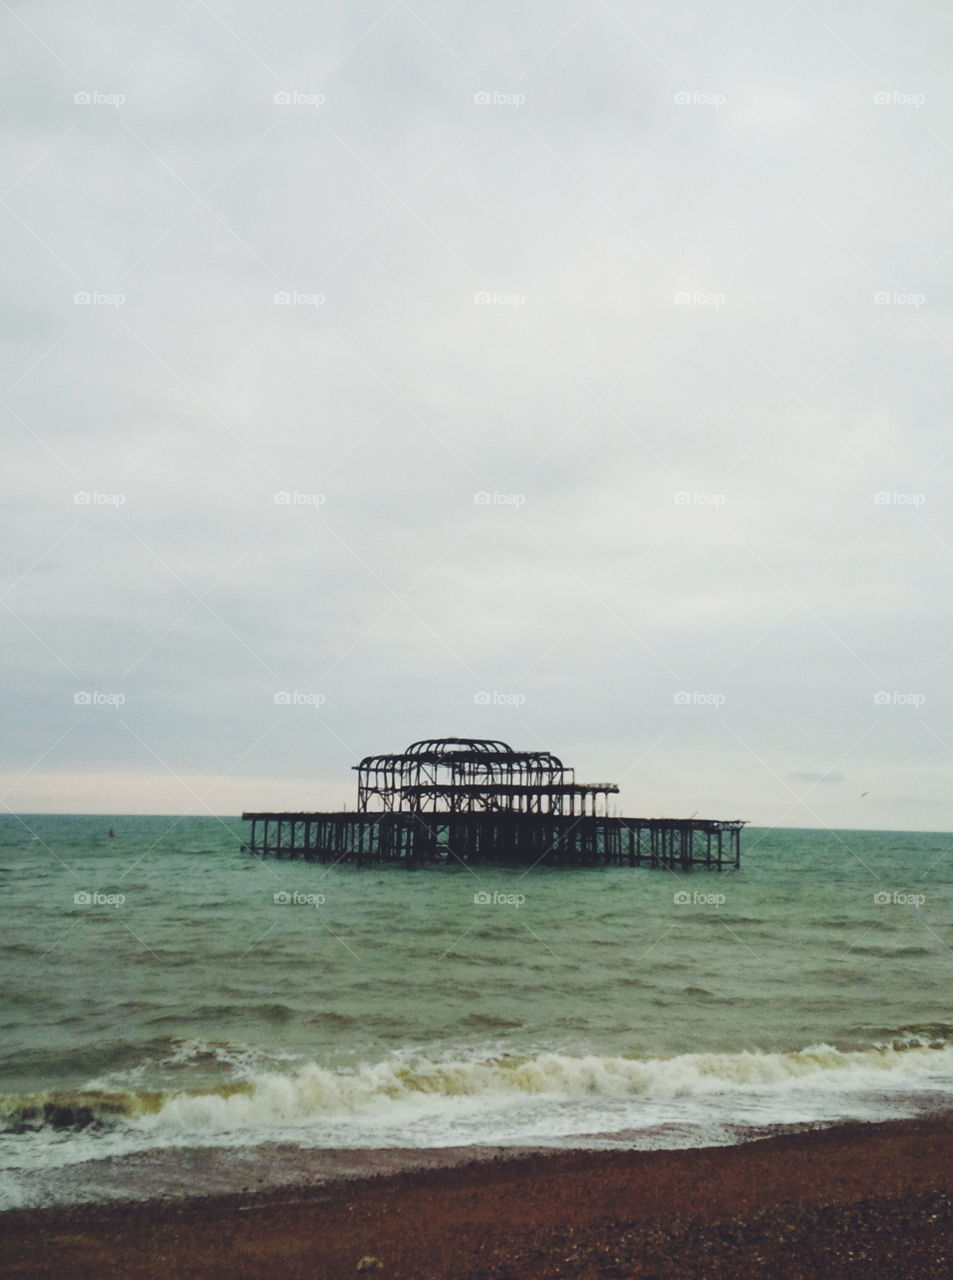 Brighton, England